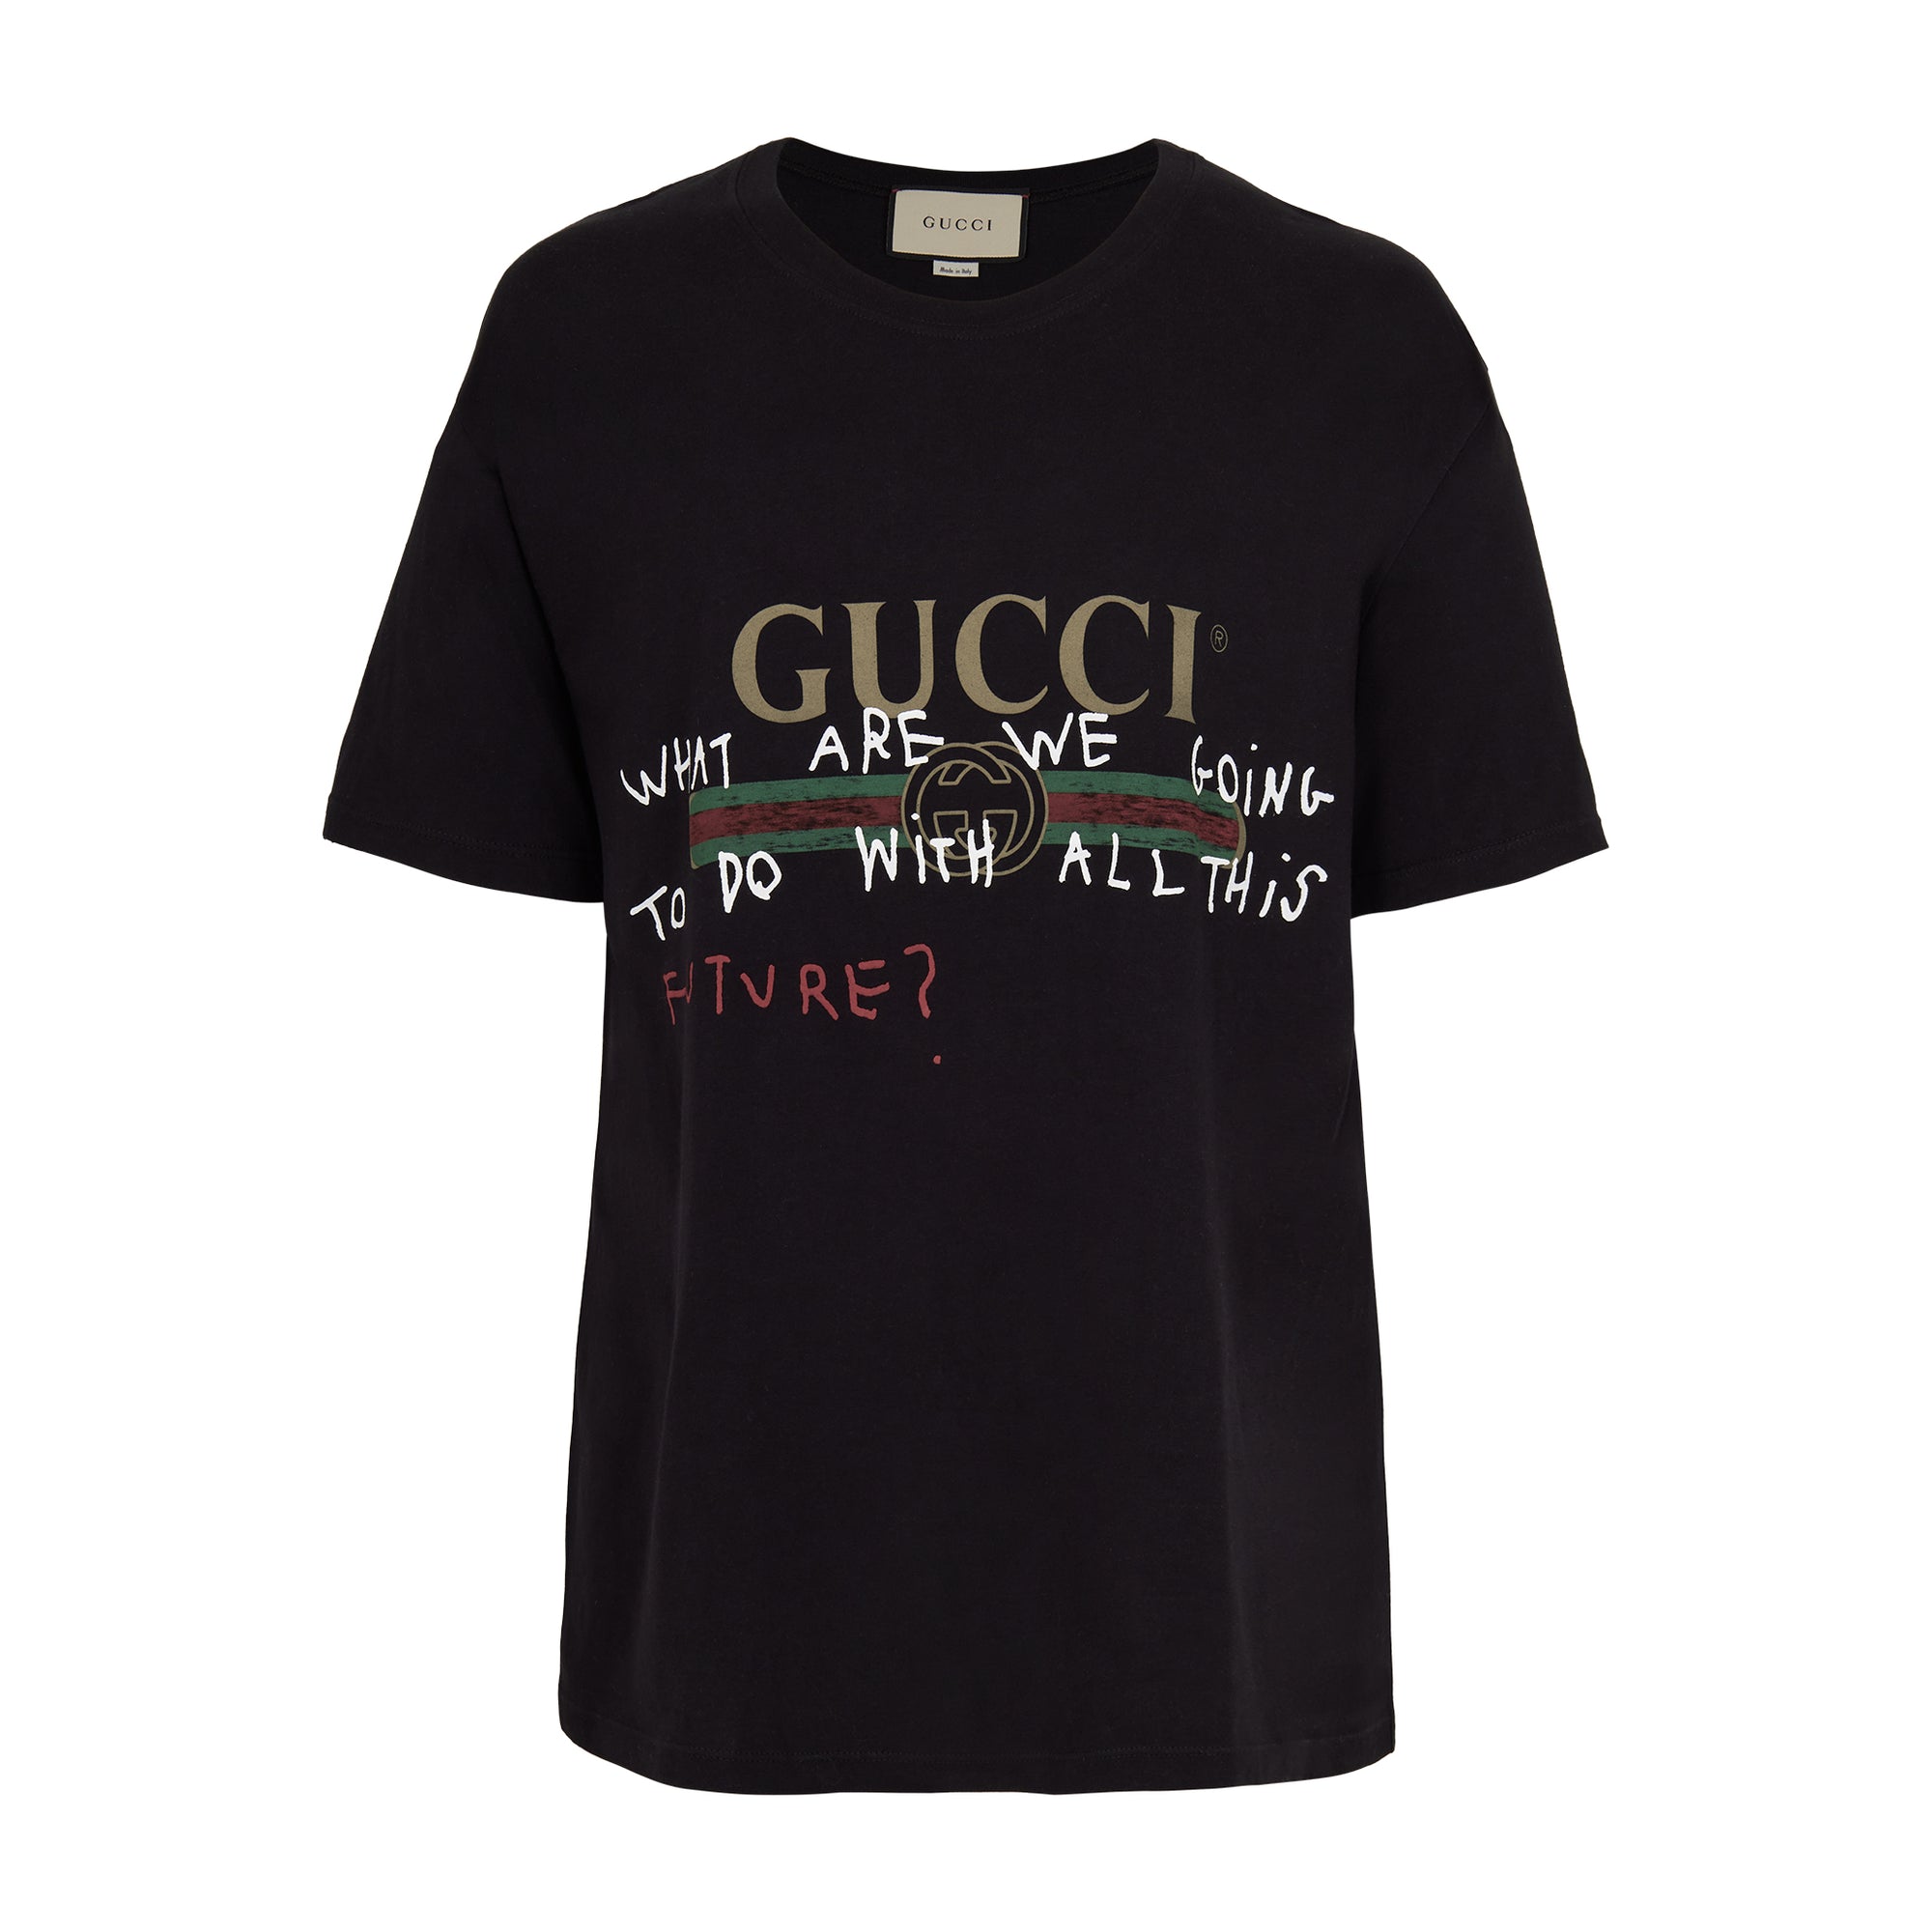 Gucci Printed T-Shirt